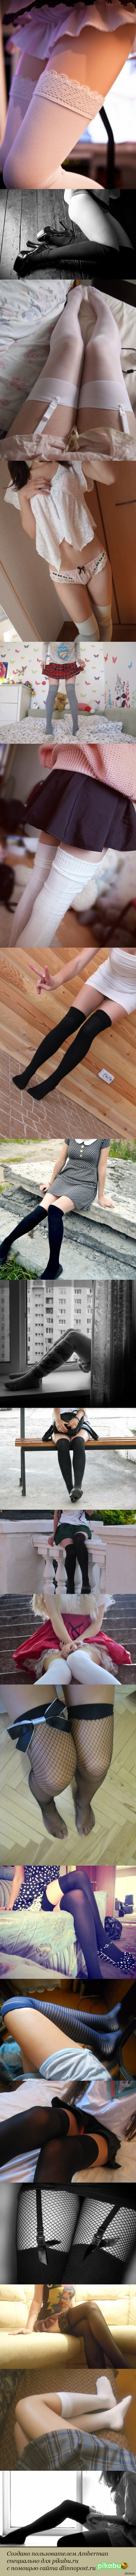 Compilation of women's legs in stockings - NSFW, Zettai ryouiki, Longpost, Stockings, Knee socks, Legs, Fetishism, Girls, Socks